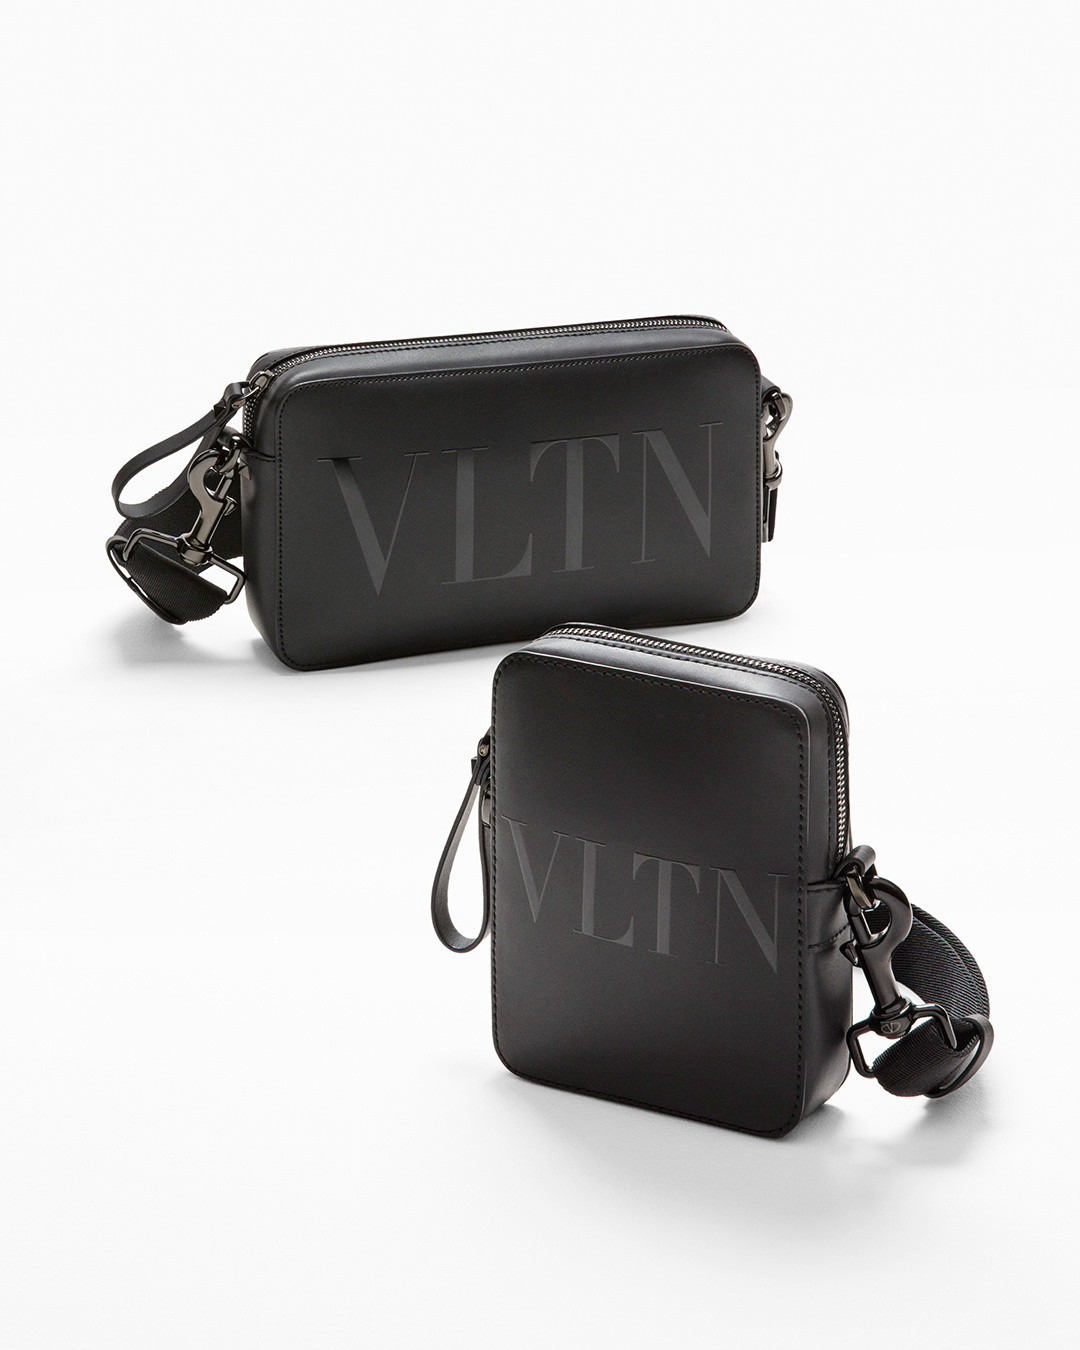 Valentino Online Boutique: Maison Valentino official site